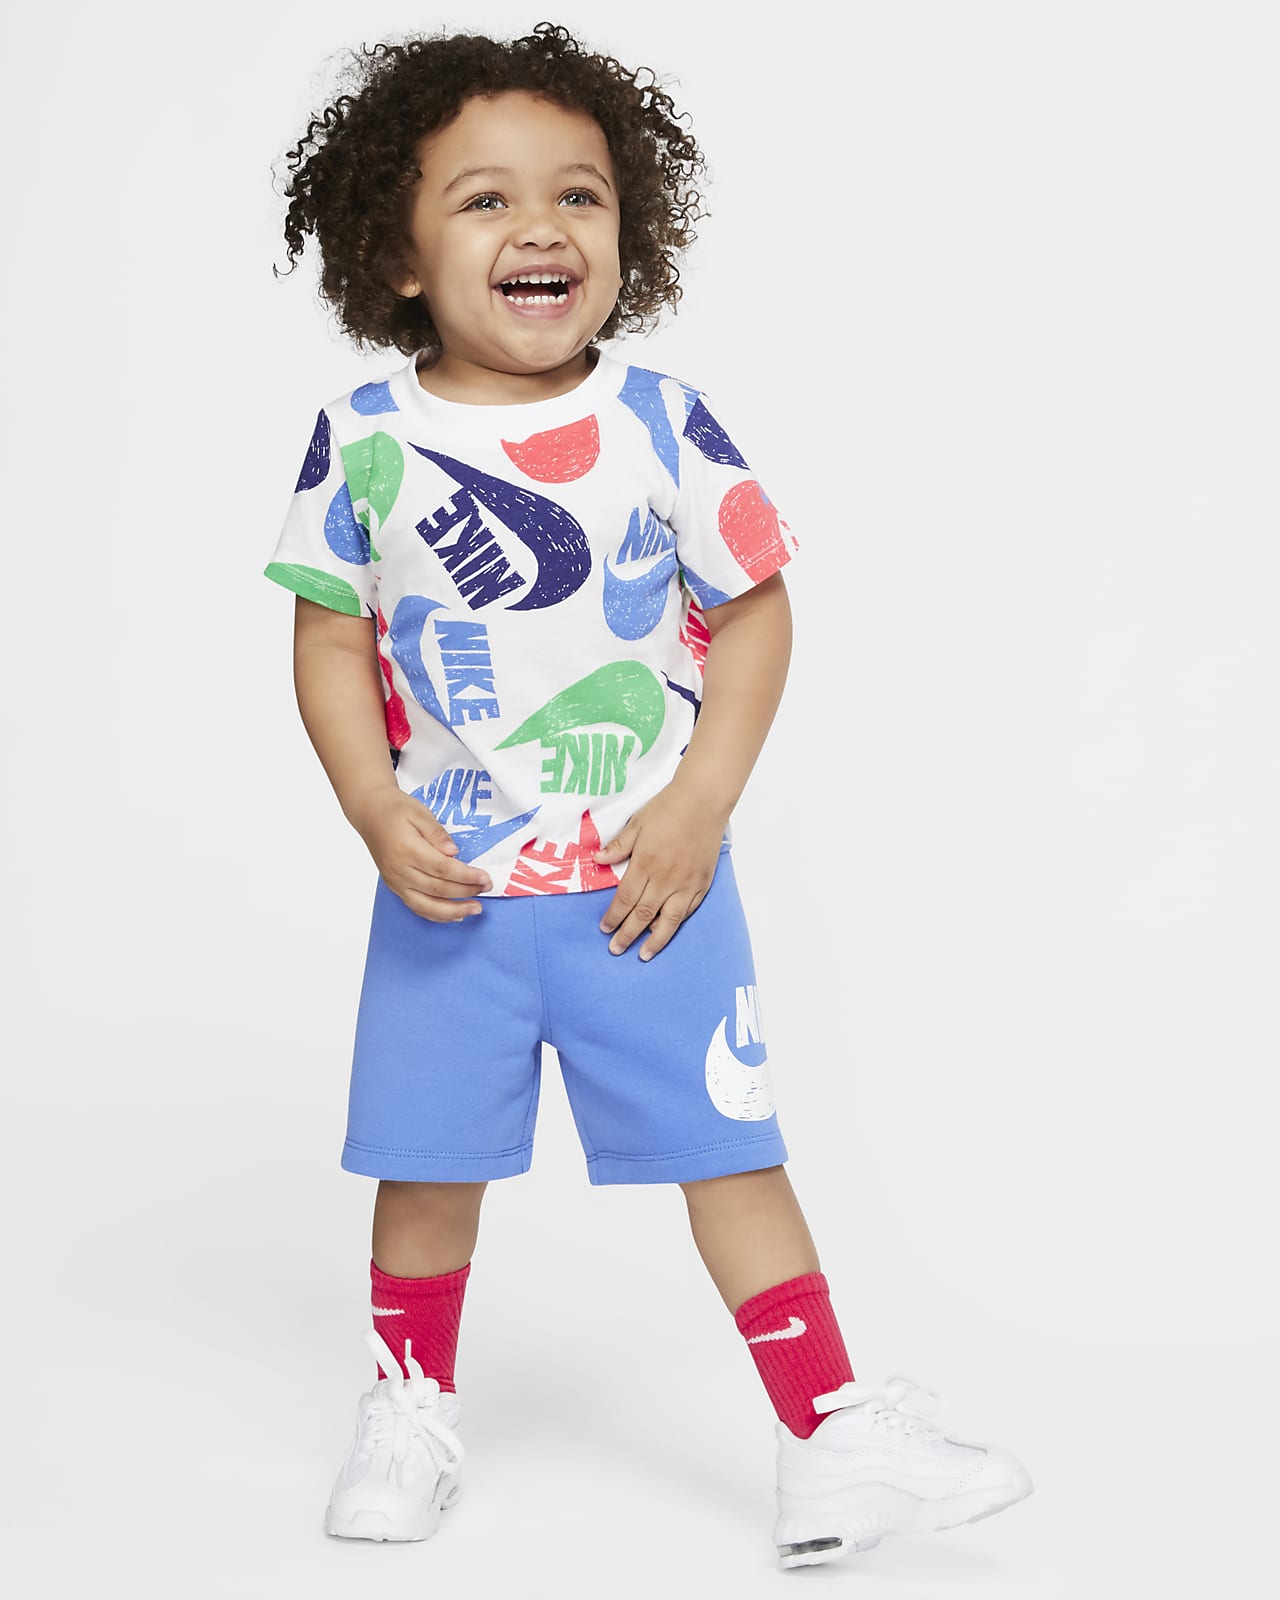 Babies In Nike Outfits | ubicaciondepersonas.cdmx.gob.mx